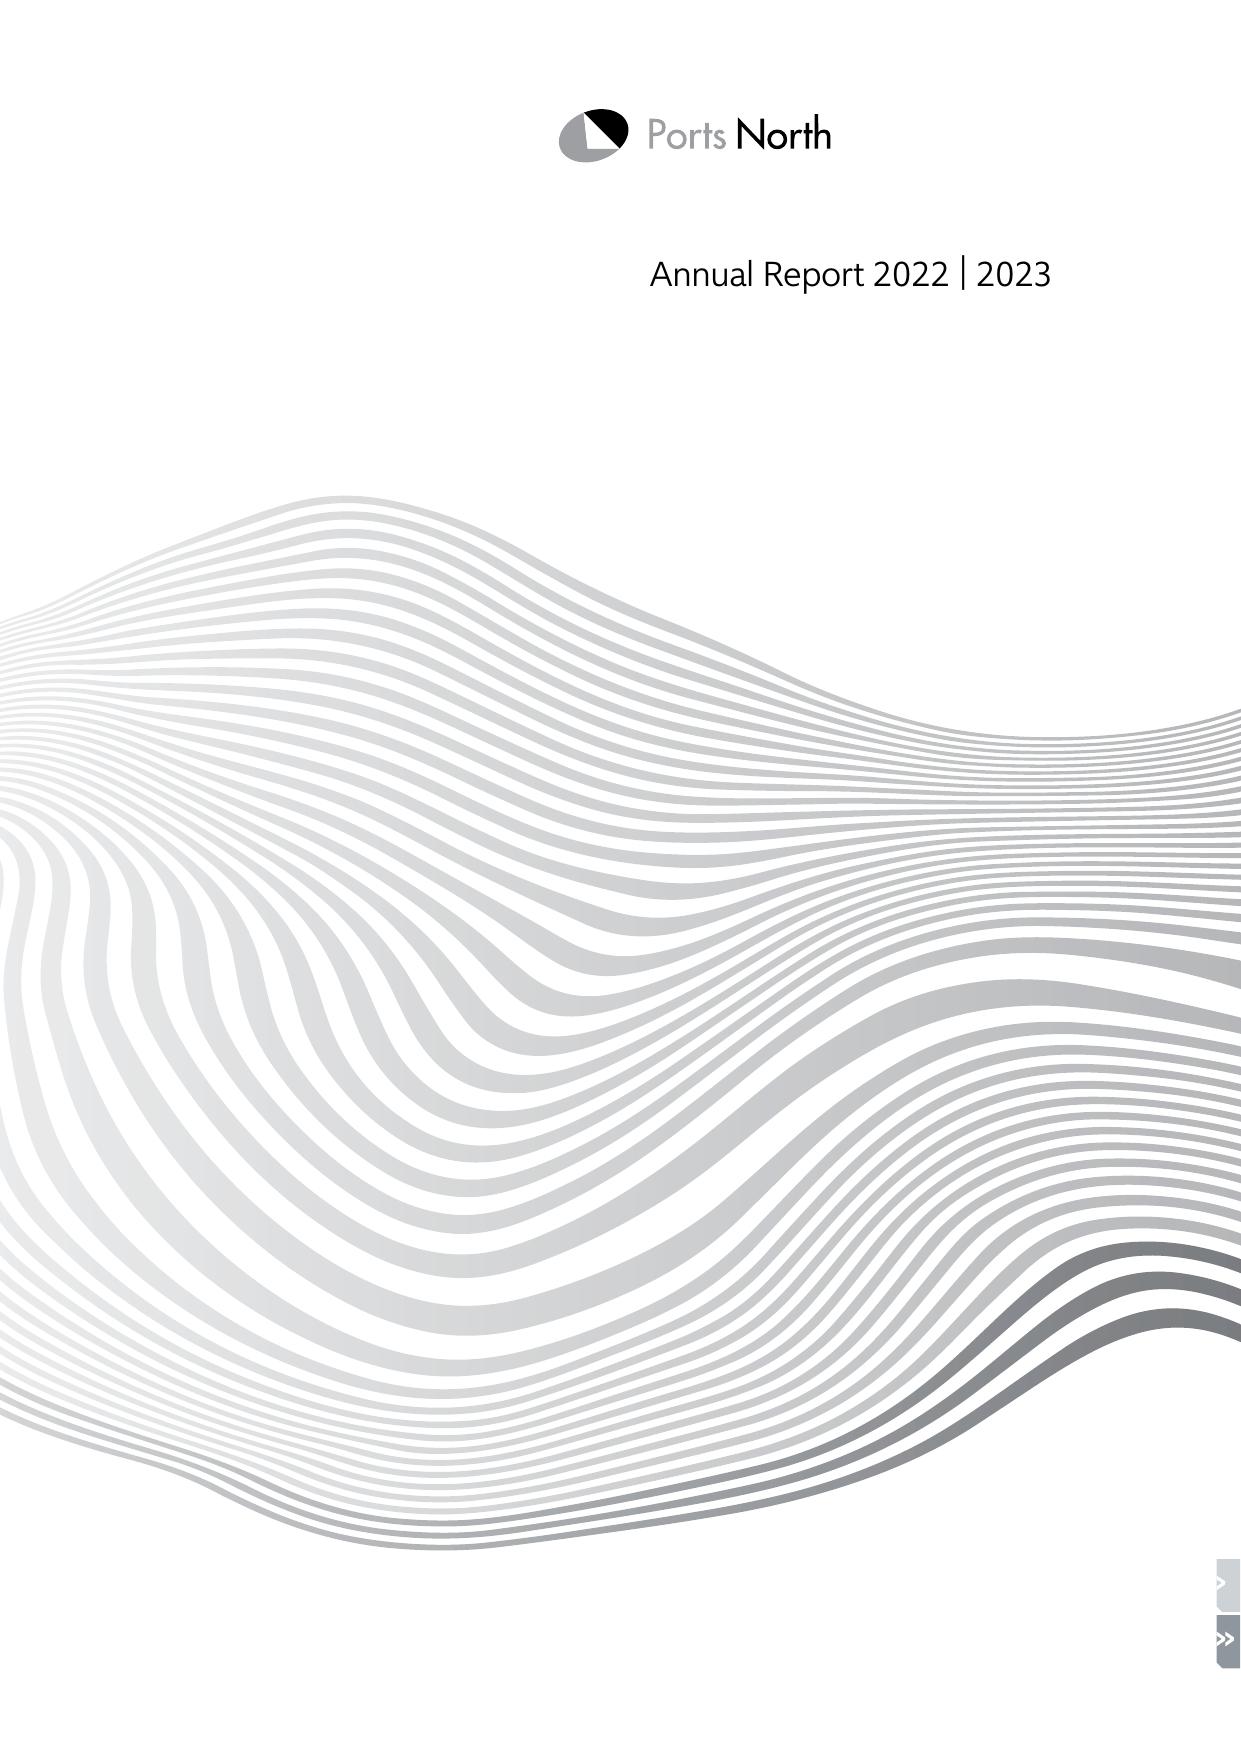 PORTSNORTH 2022 Annual Report